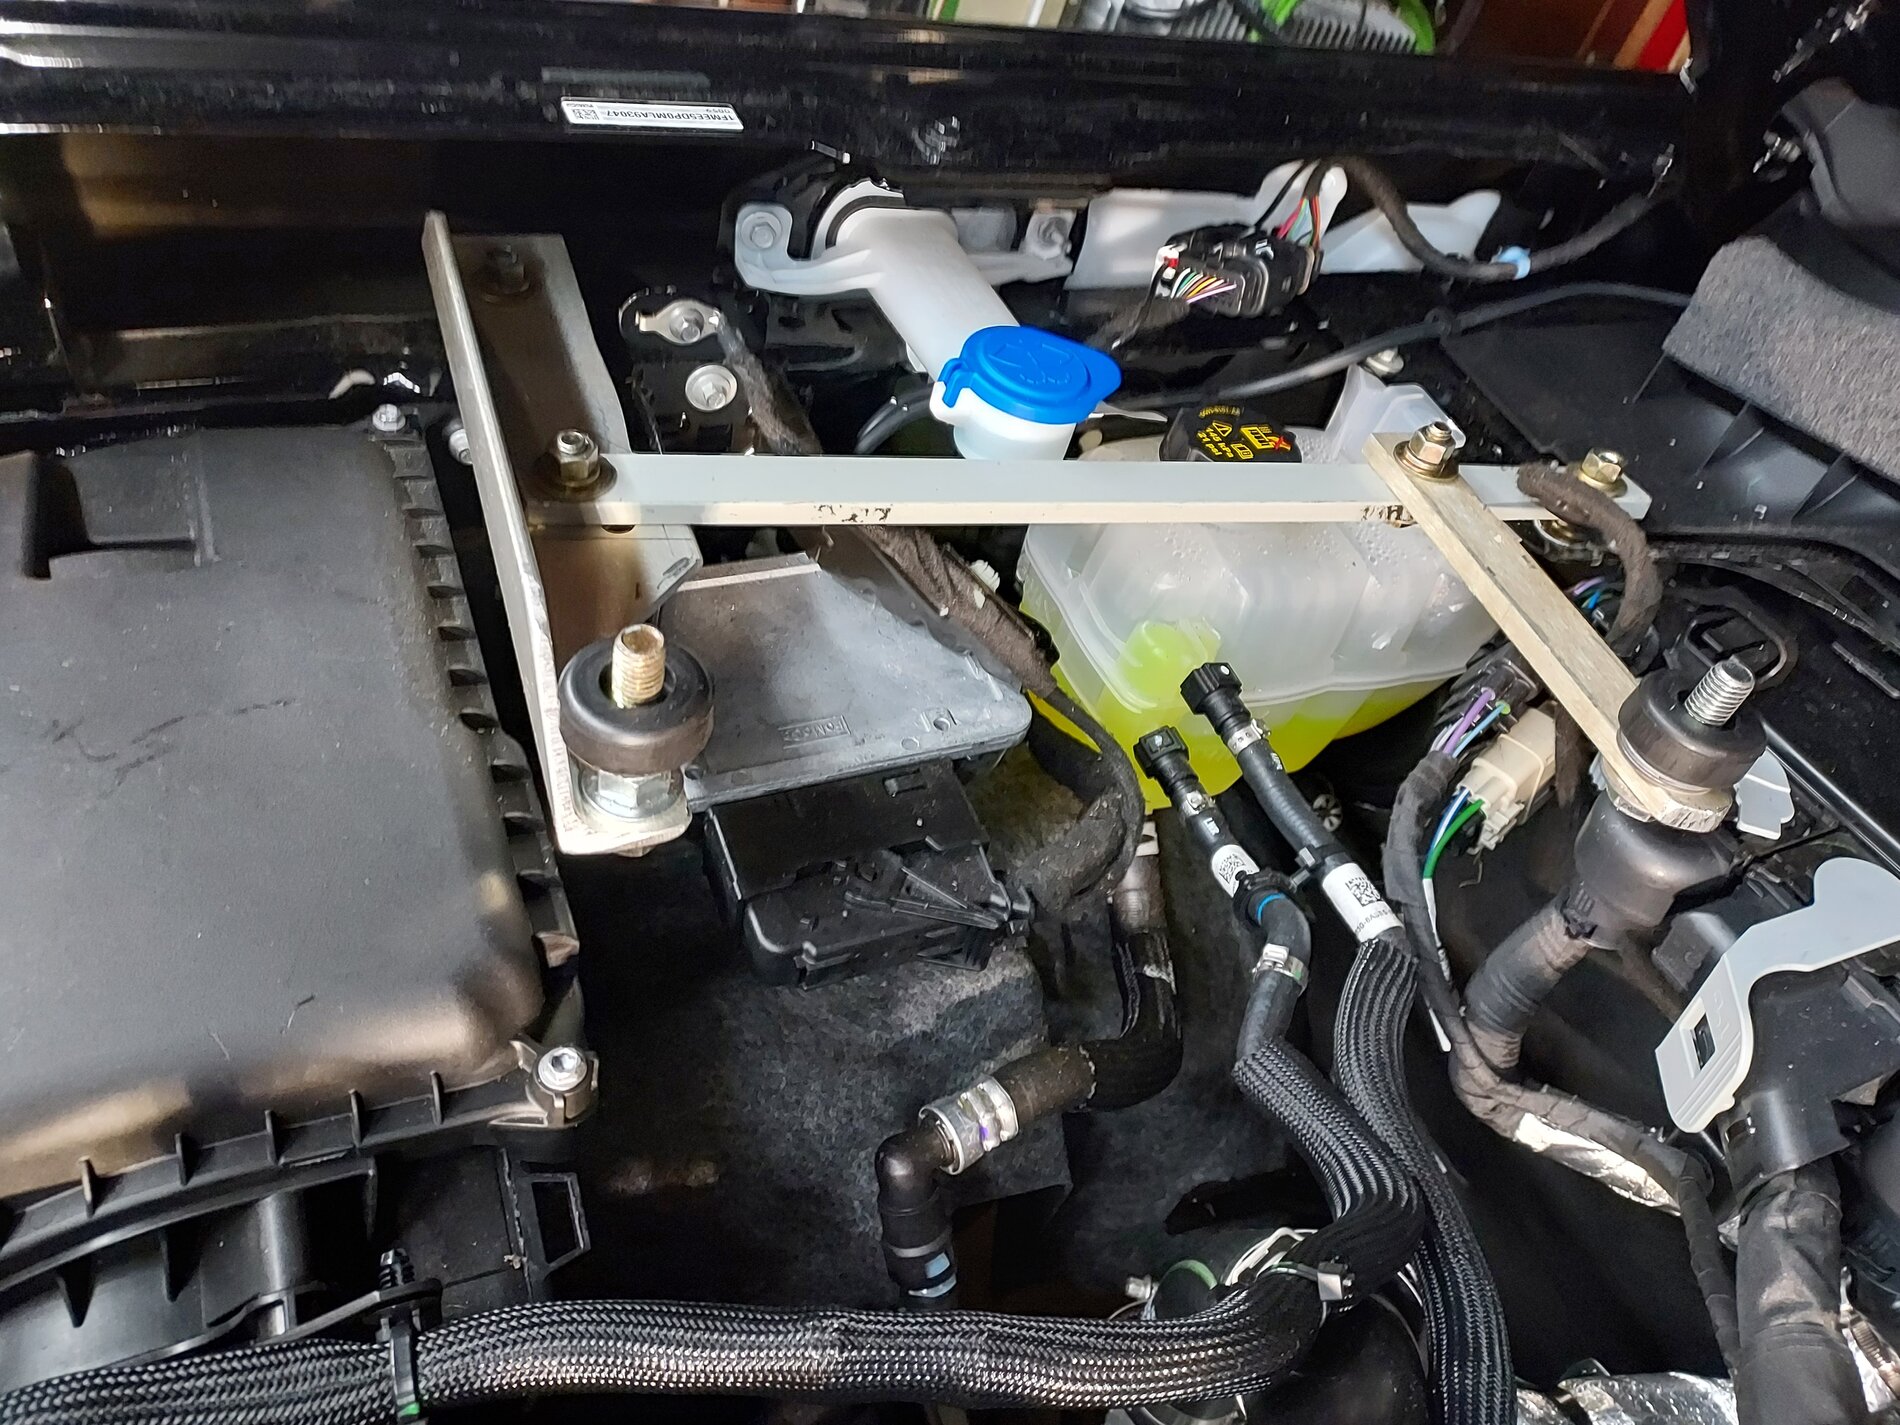 Ford Bronco ARB Dual Compressor Installed - Under Hood 2.7L Engine Compartment det-dcc020ib_xl